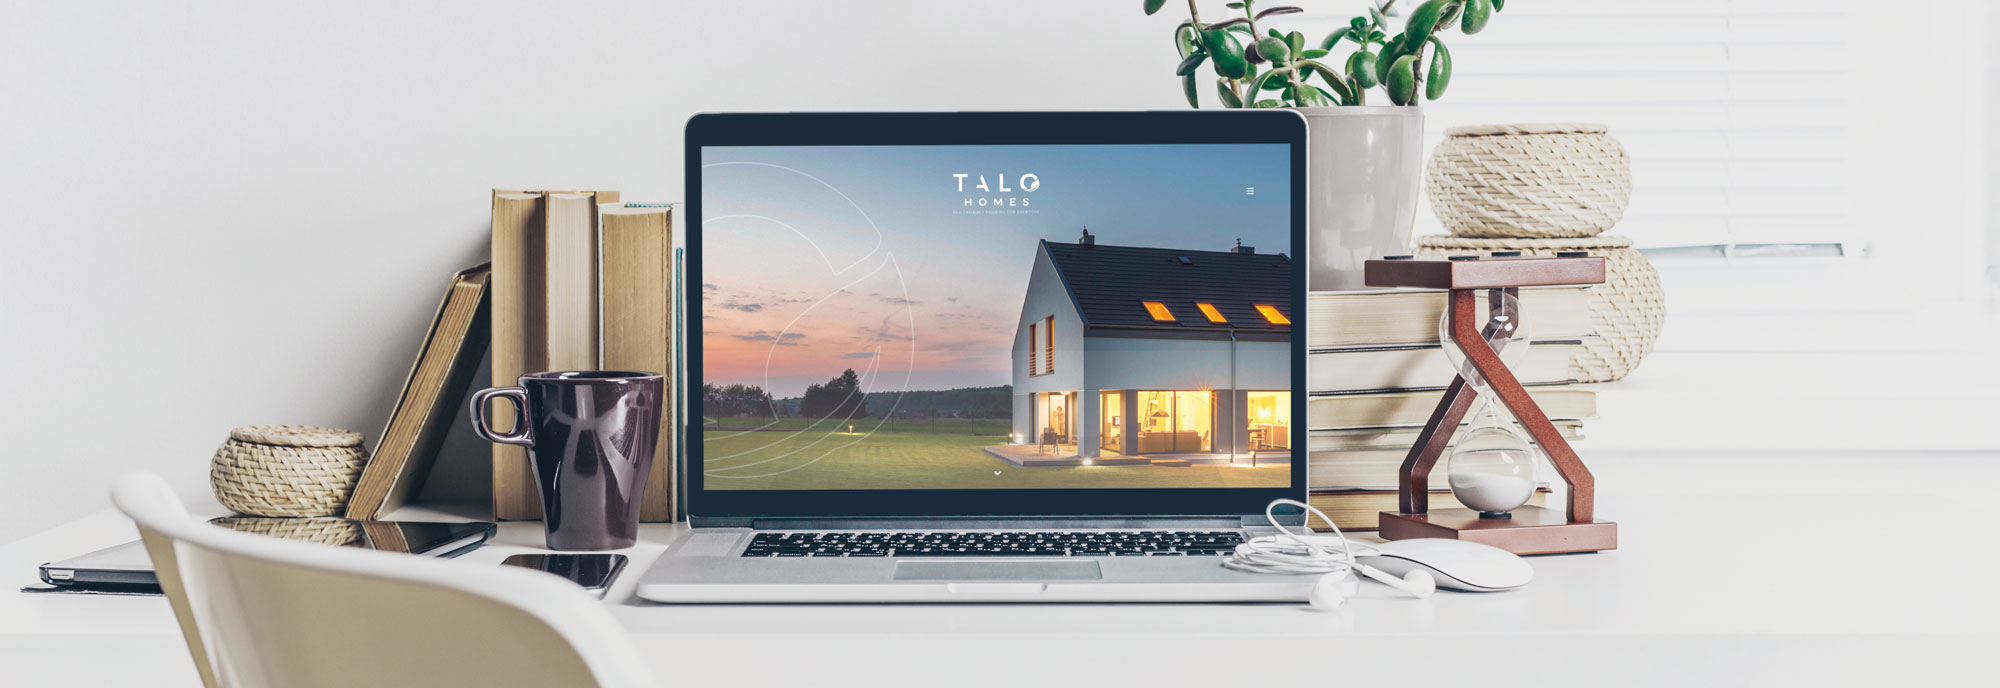 TALO Homes Website Development by Inventive